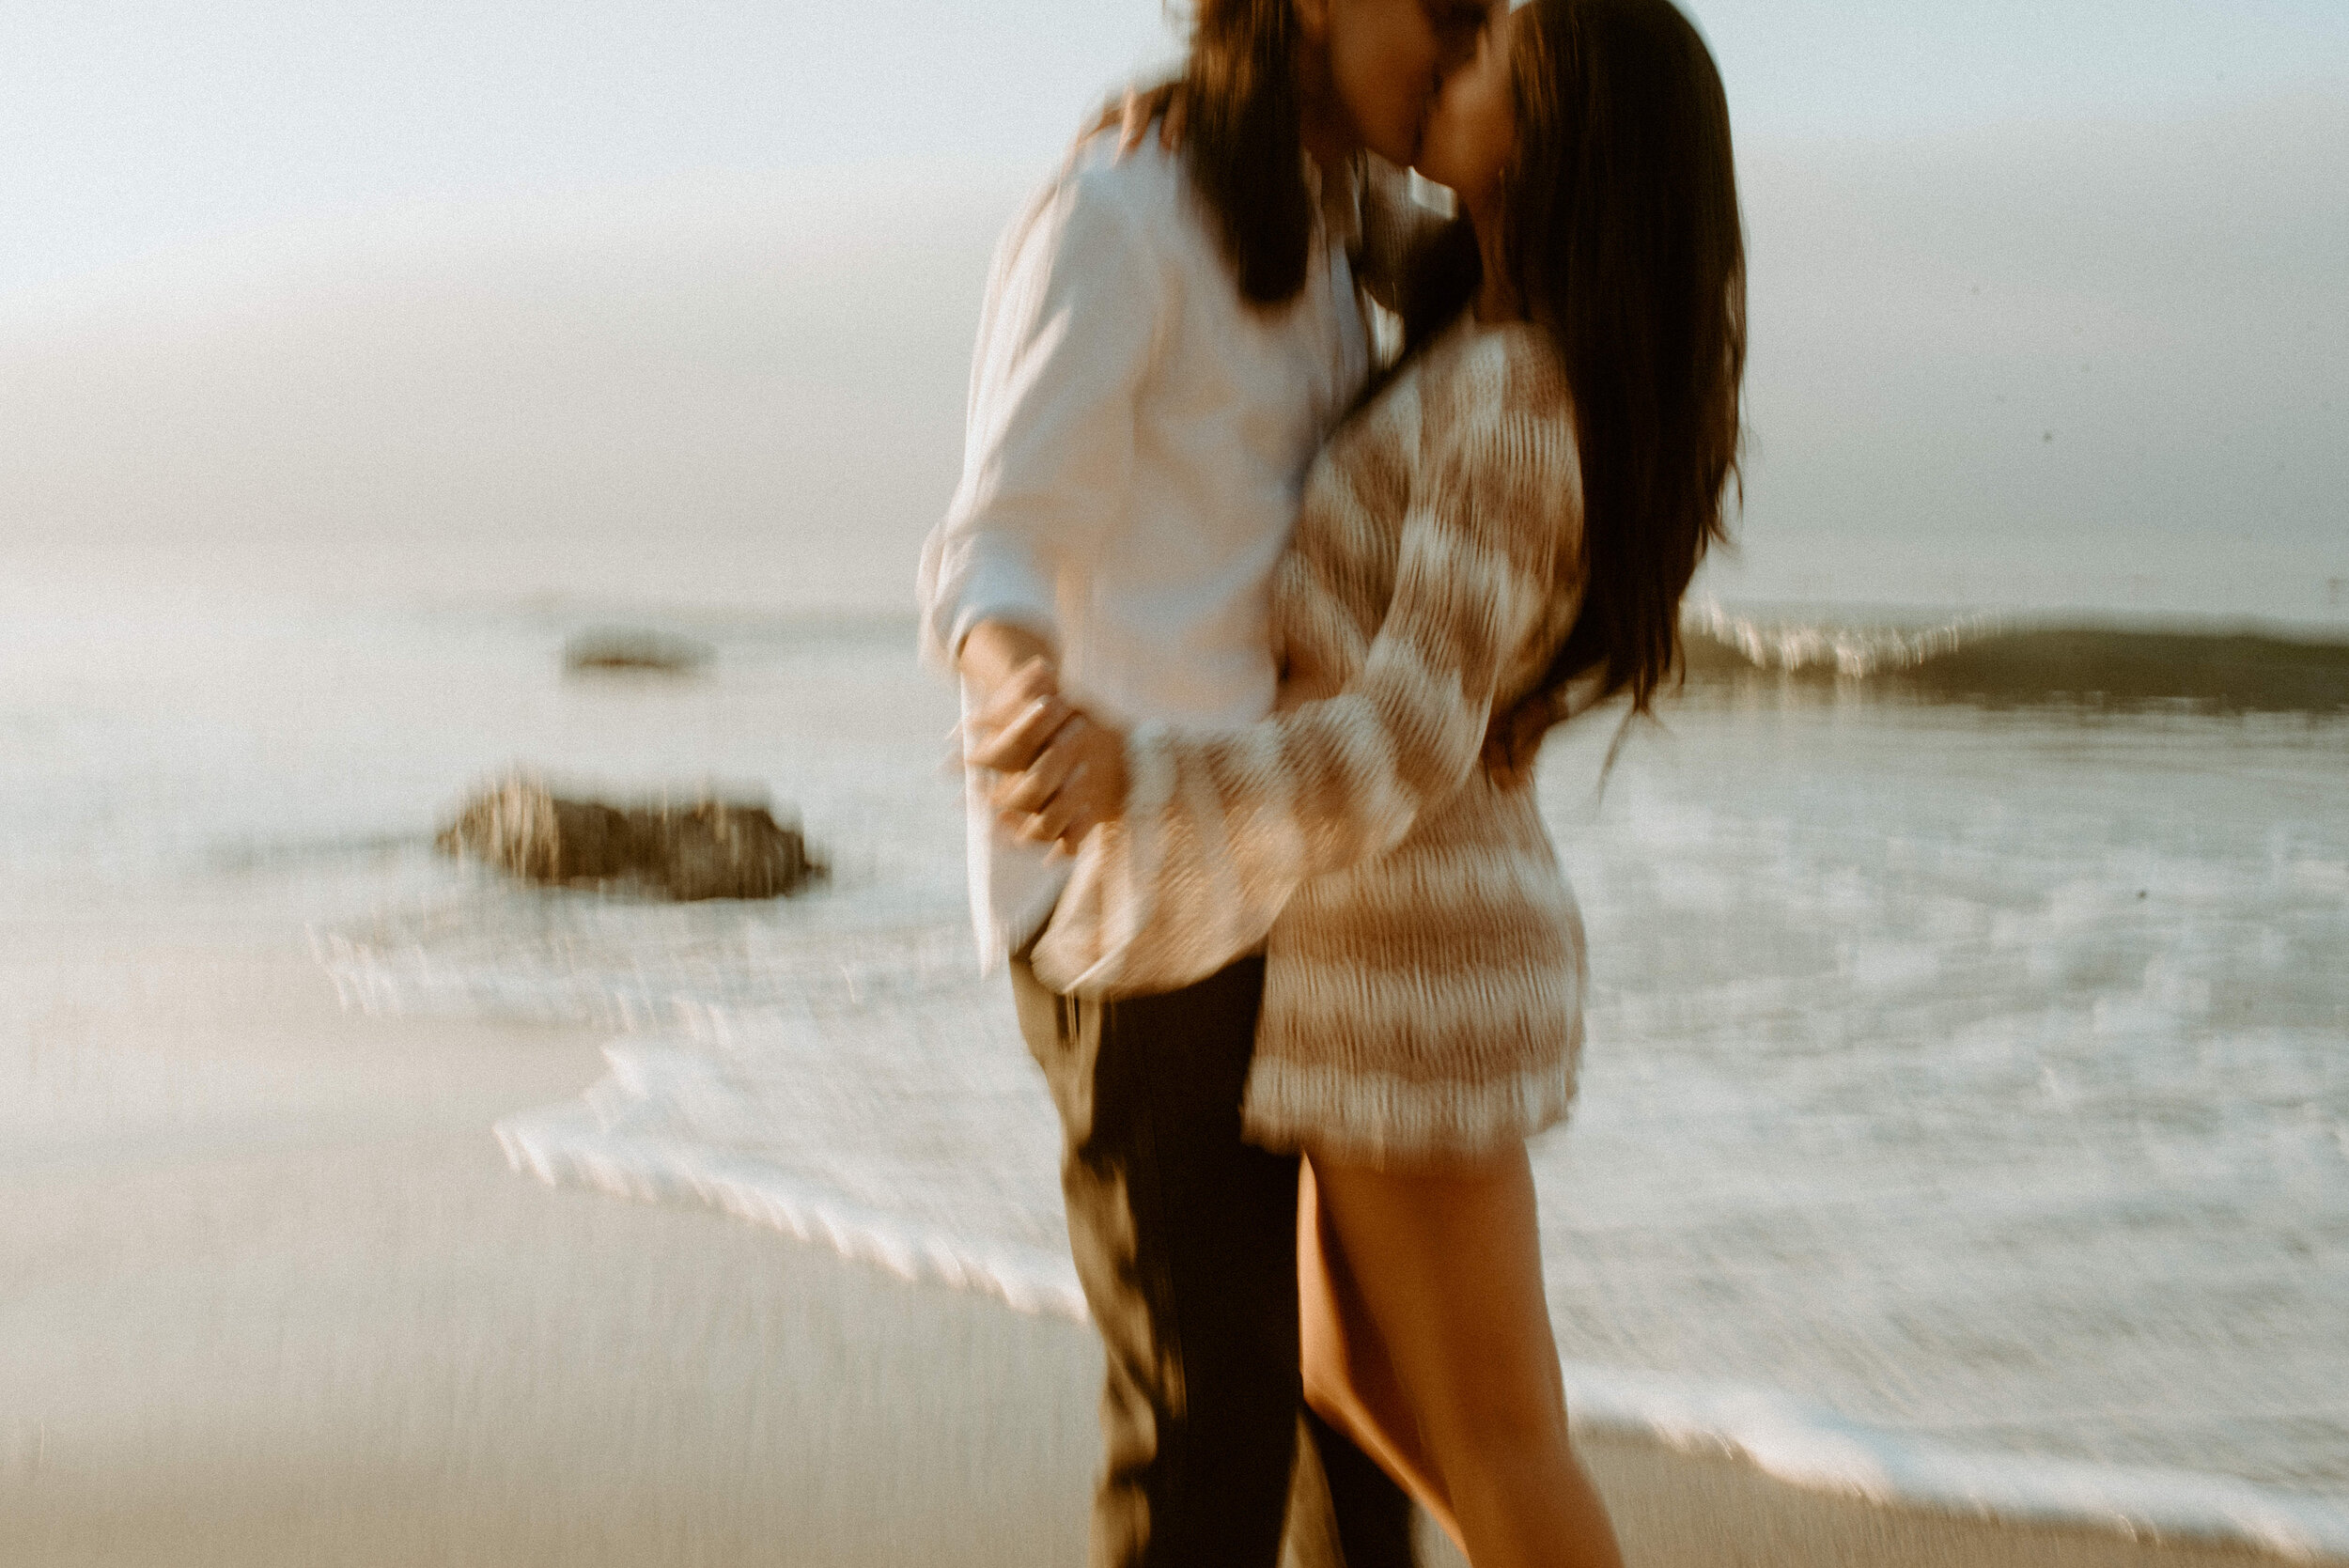 Sunrise Malibu Couples Photos | El Matador Beach Engagement Session | blurry creative couples poses | sunrise at el matador beach | earthy neutral color couples outfits